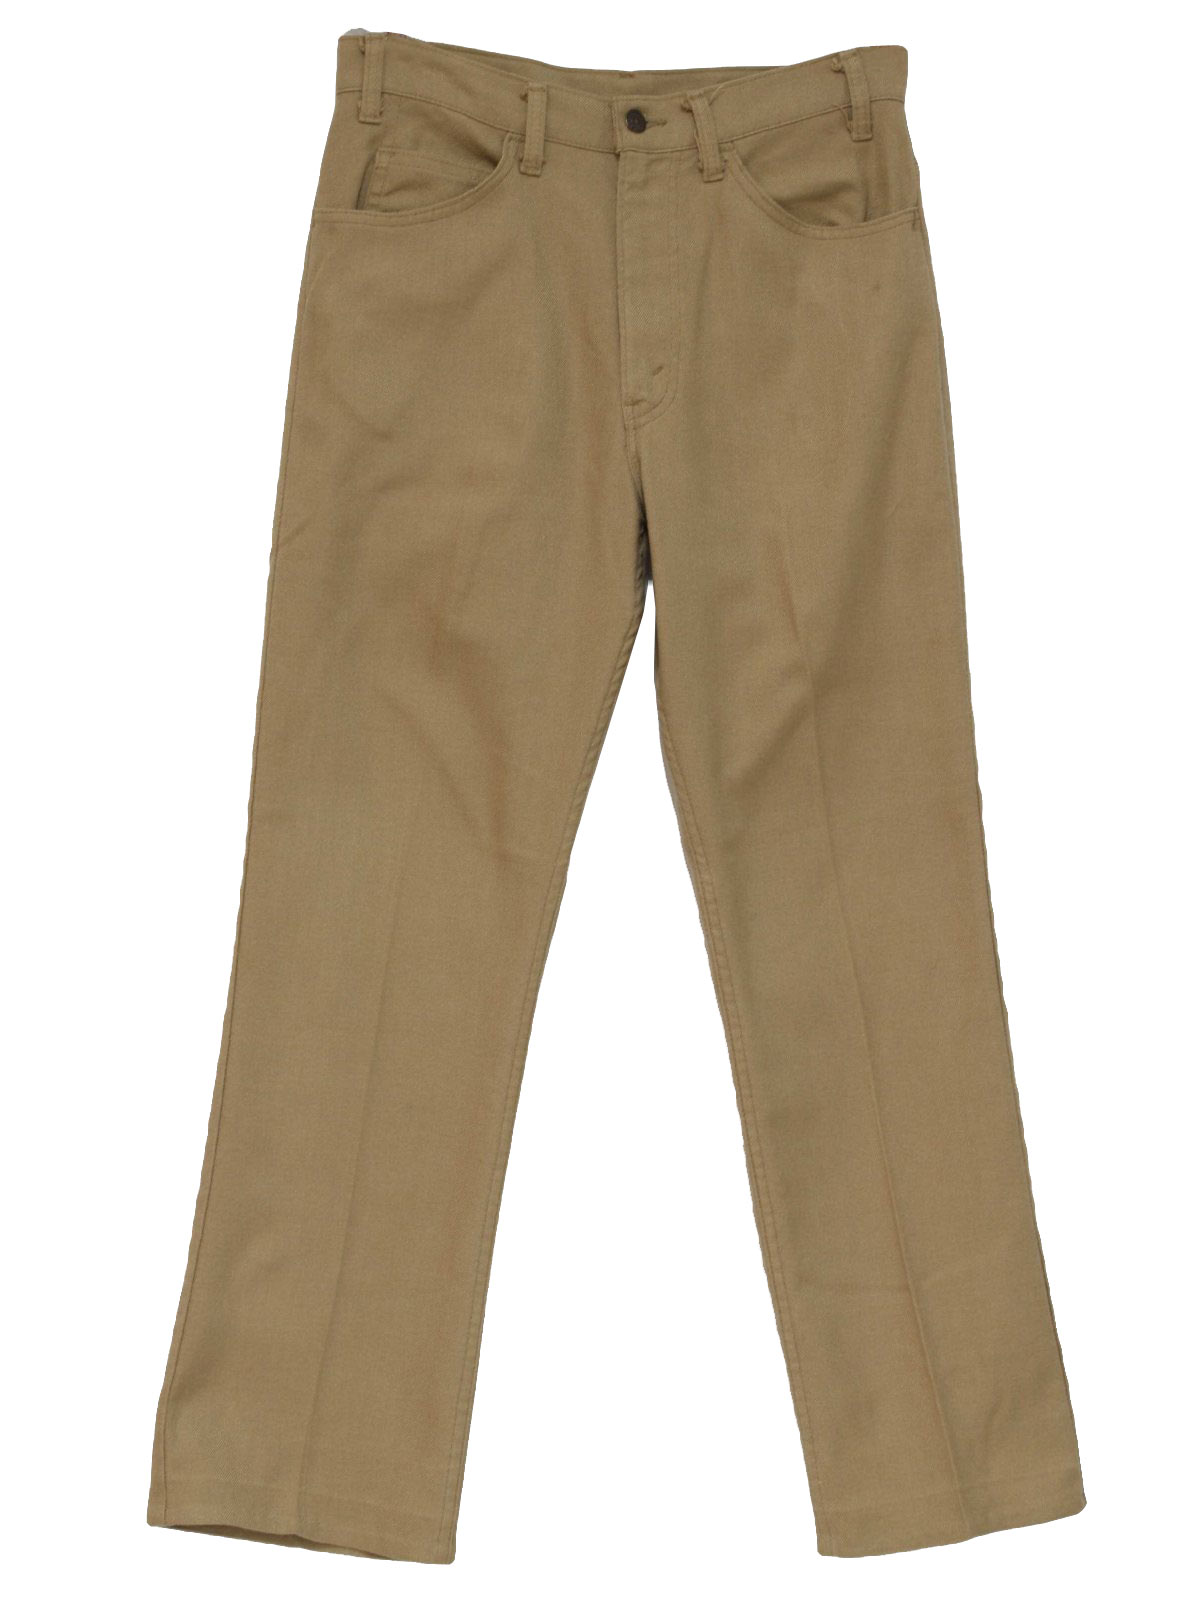 70's Vintage Flared Pants / Flares: 70s -Levis Sta Prest- Mens khaki ...